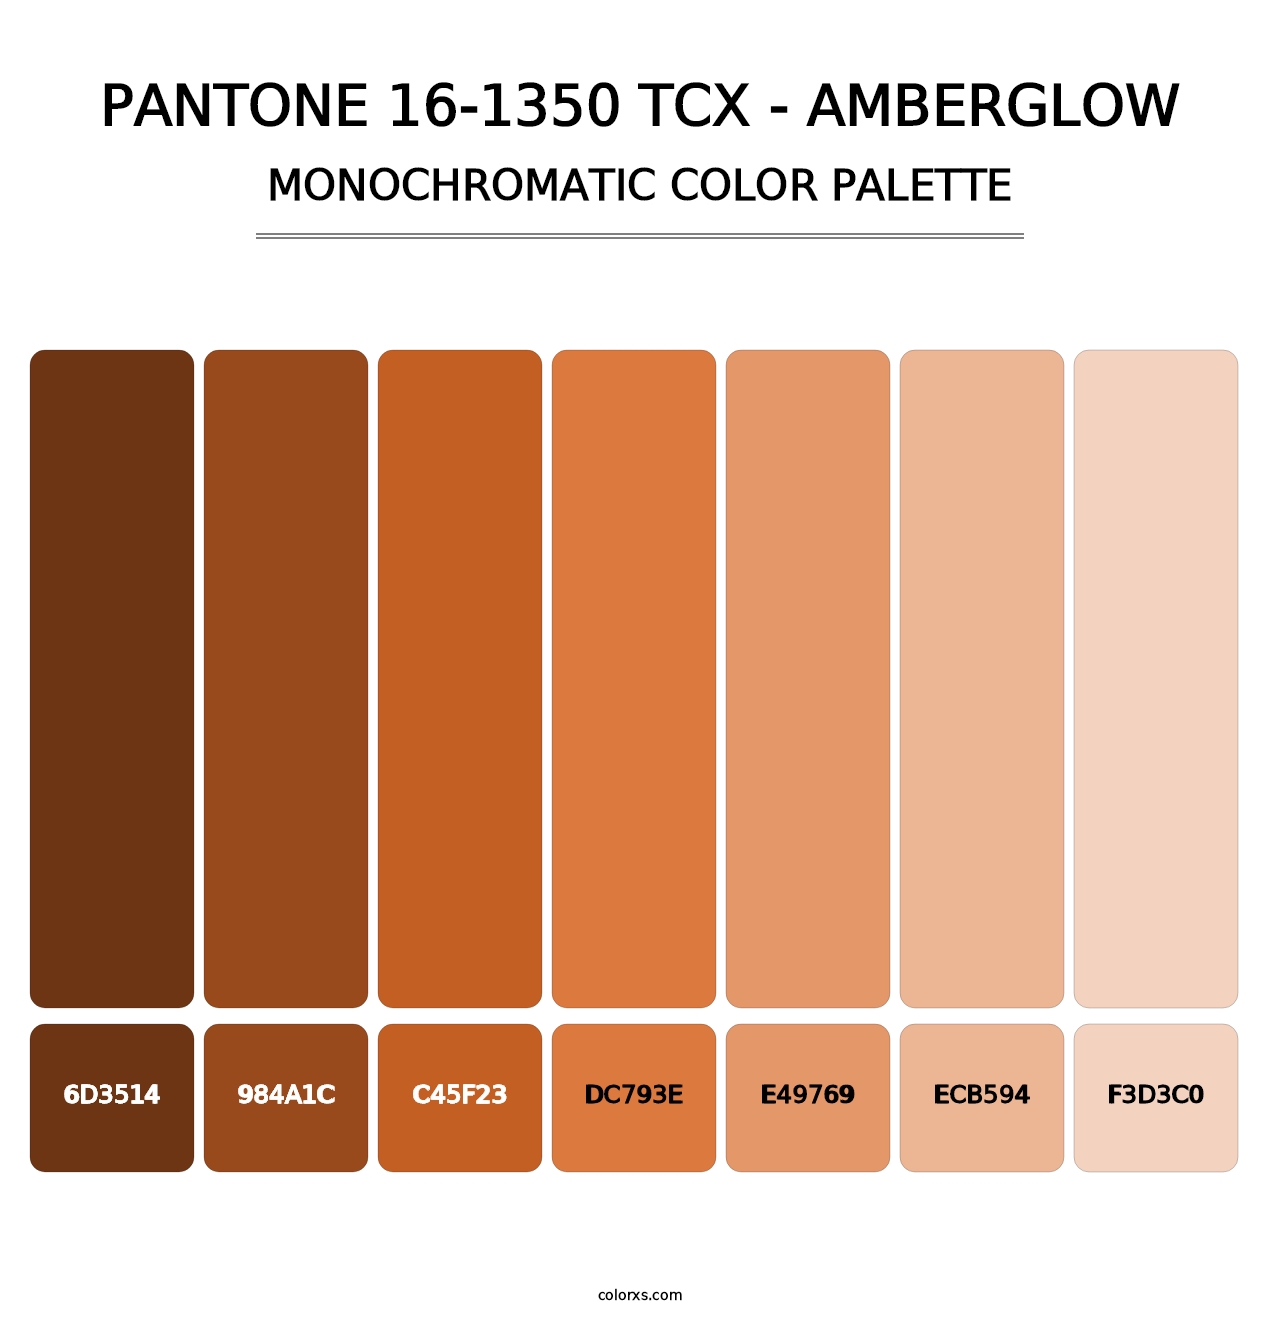 PANTONE 16-1350 TCX - Amberglow - Monochromatic Color Palette